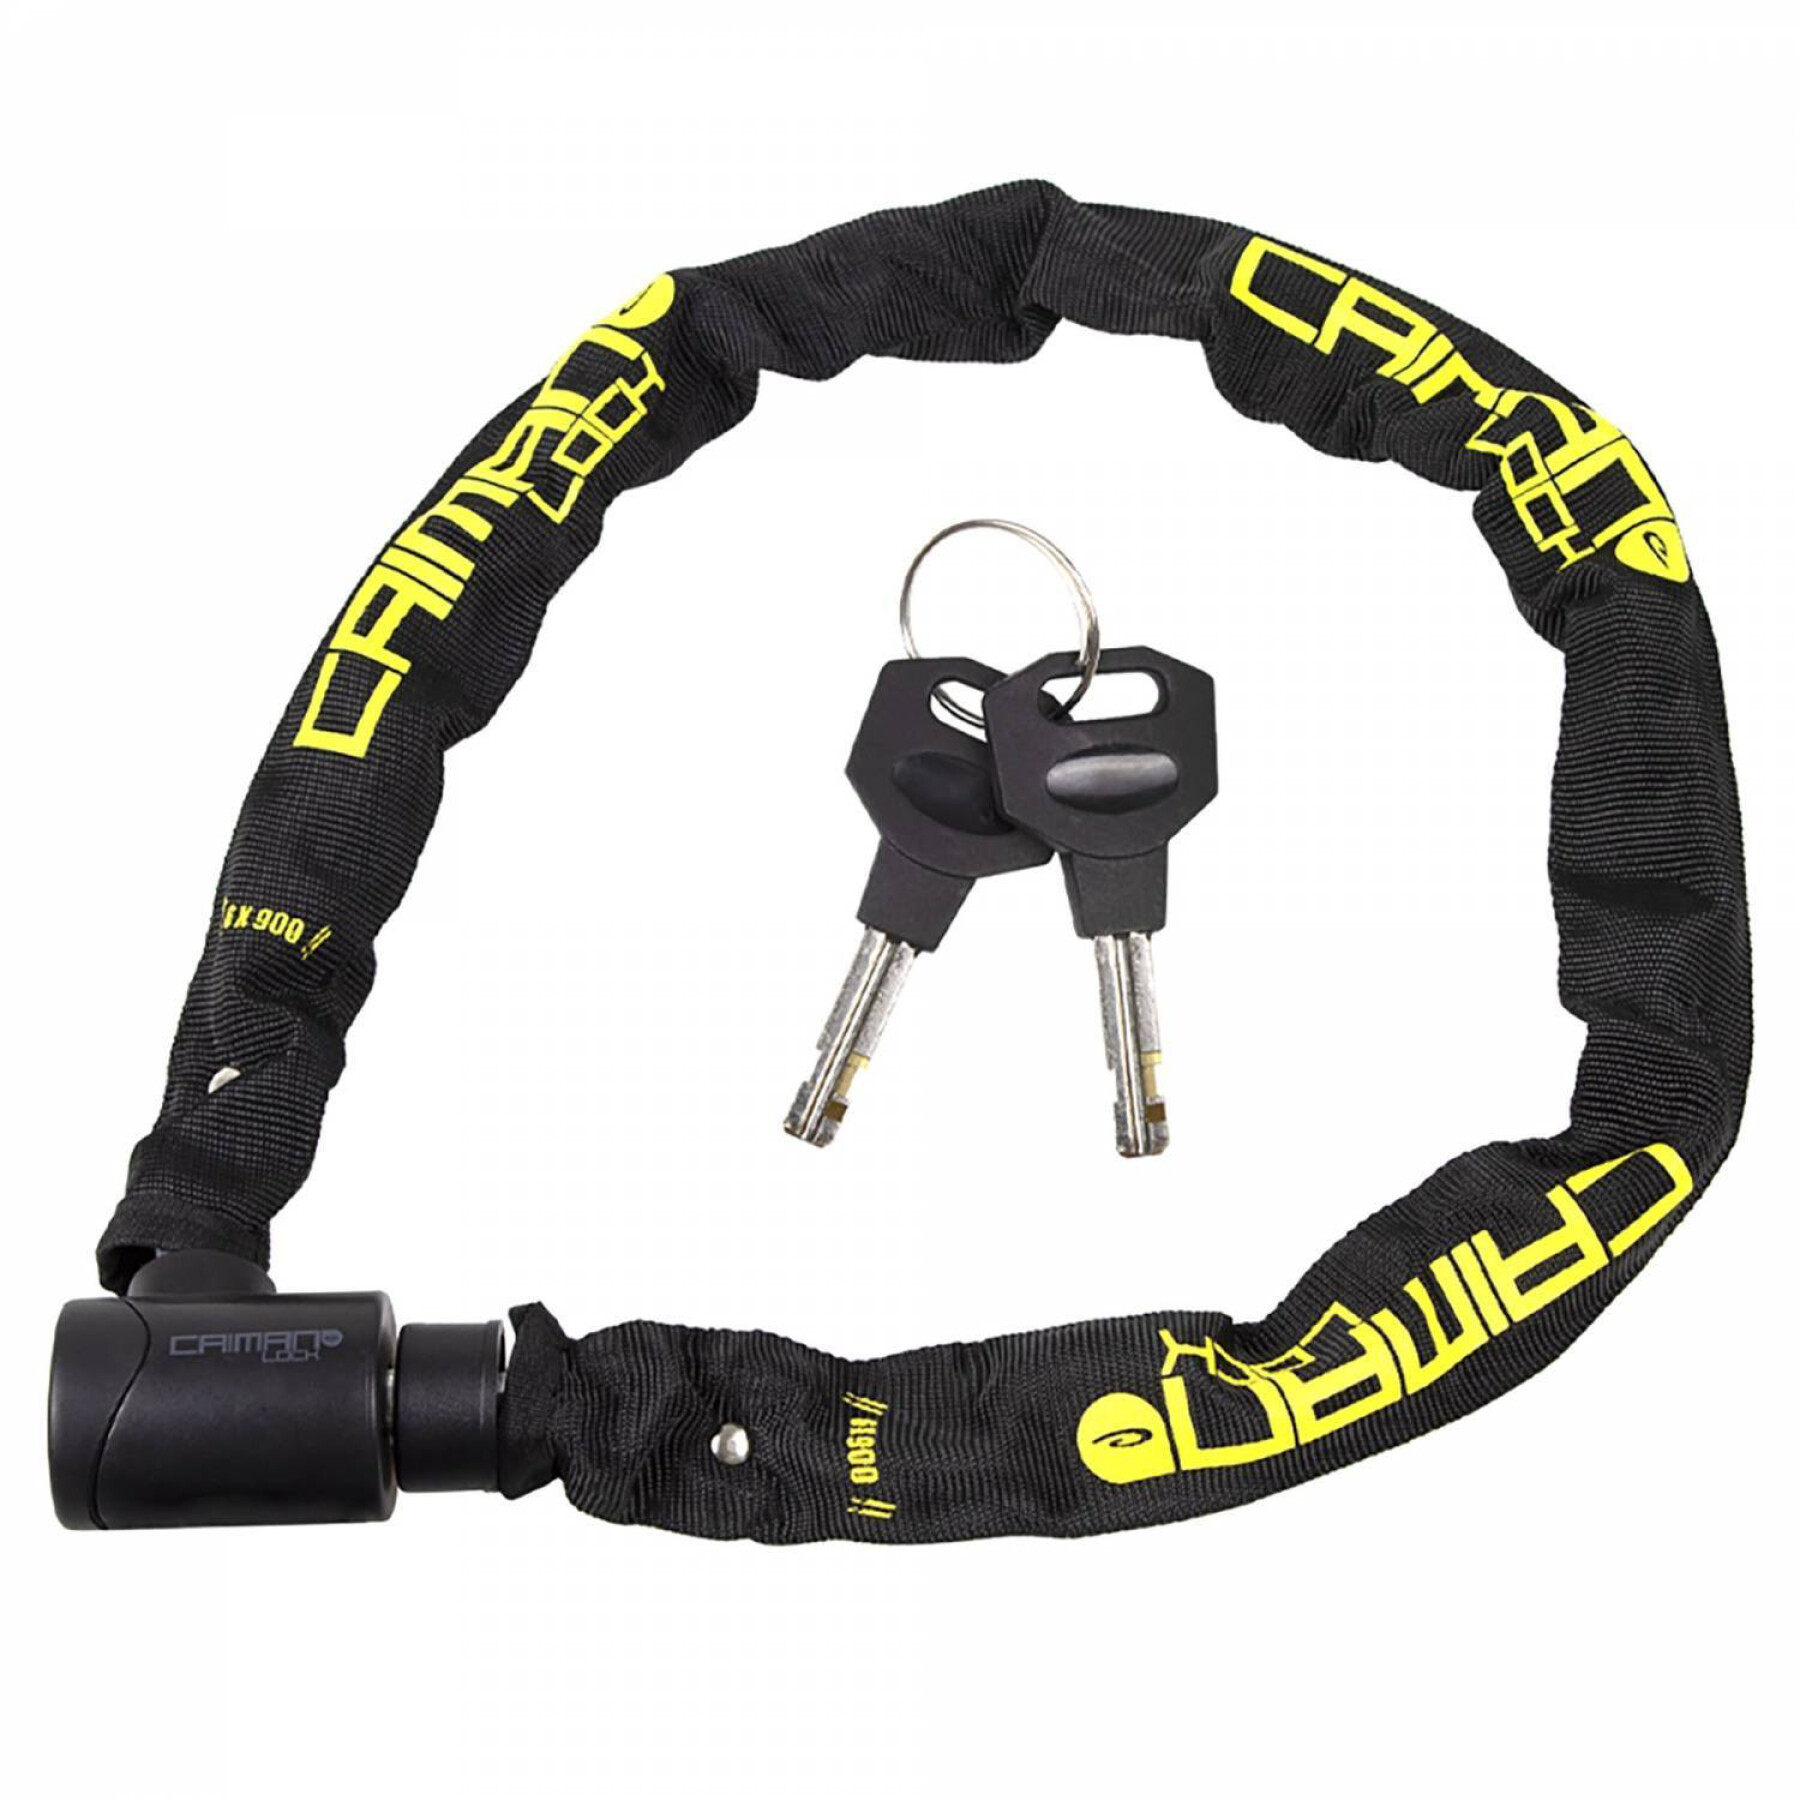 Chain padlock with nylon sheath and pick-proof lock Eltin